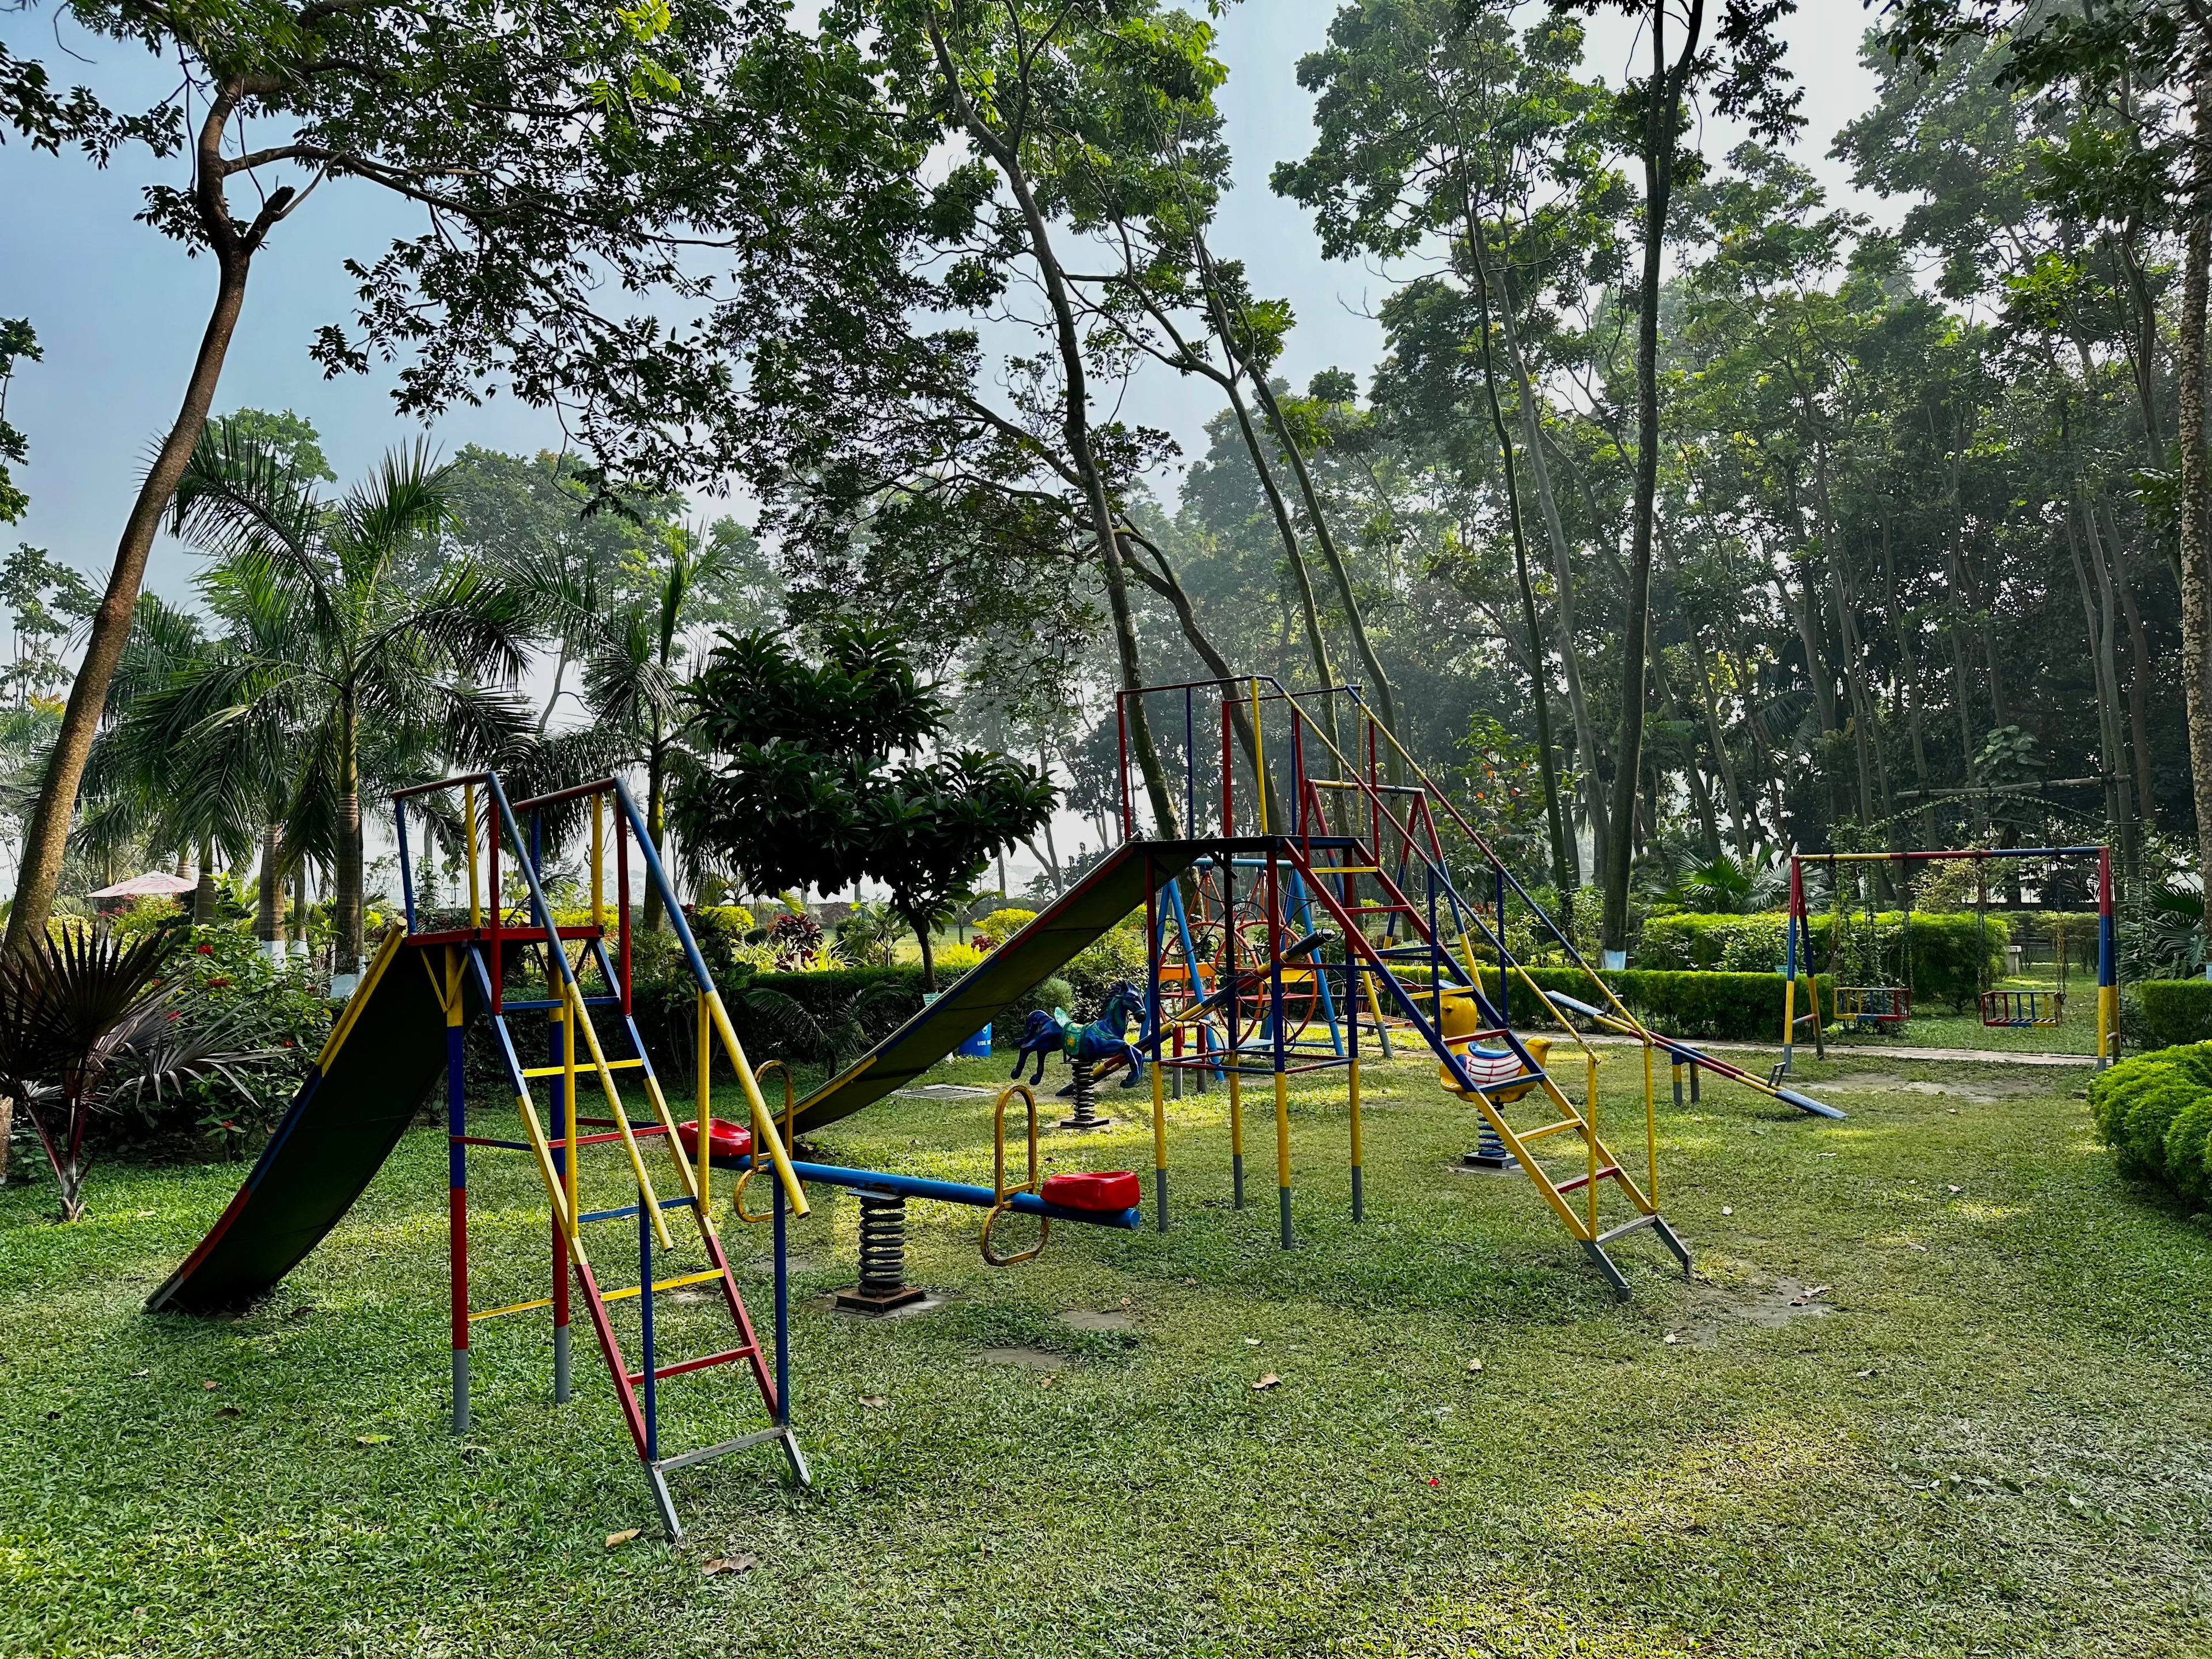 Children's playground set among the verdant gardens of Barnochata, a family-friendly resort and Dhaka hotel located in Savar.